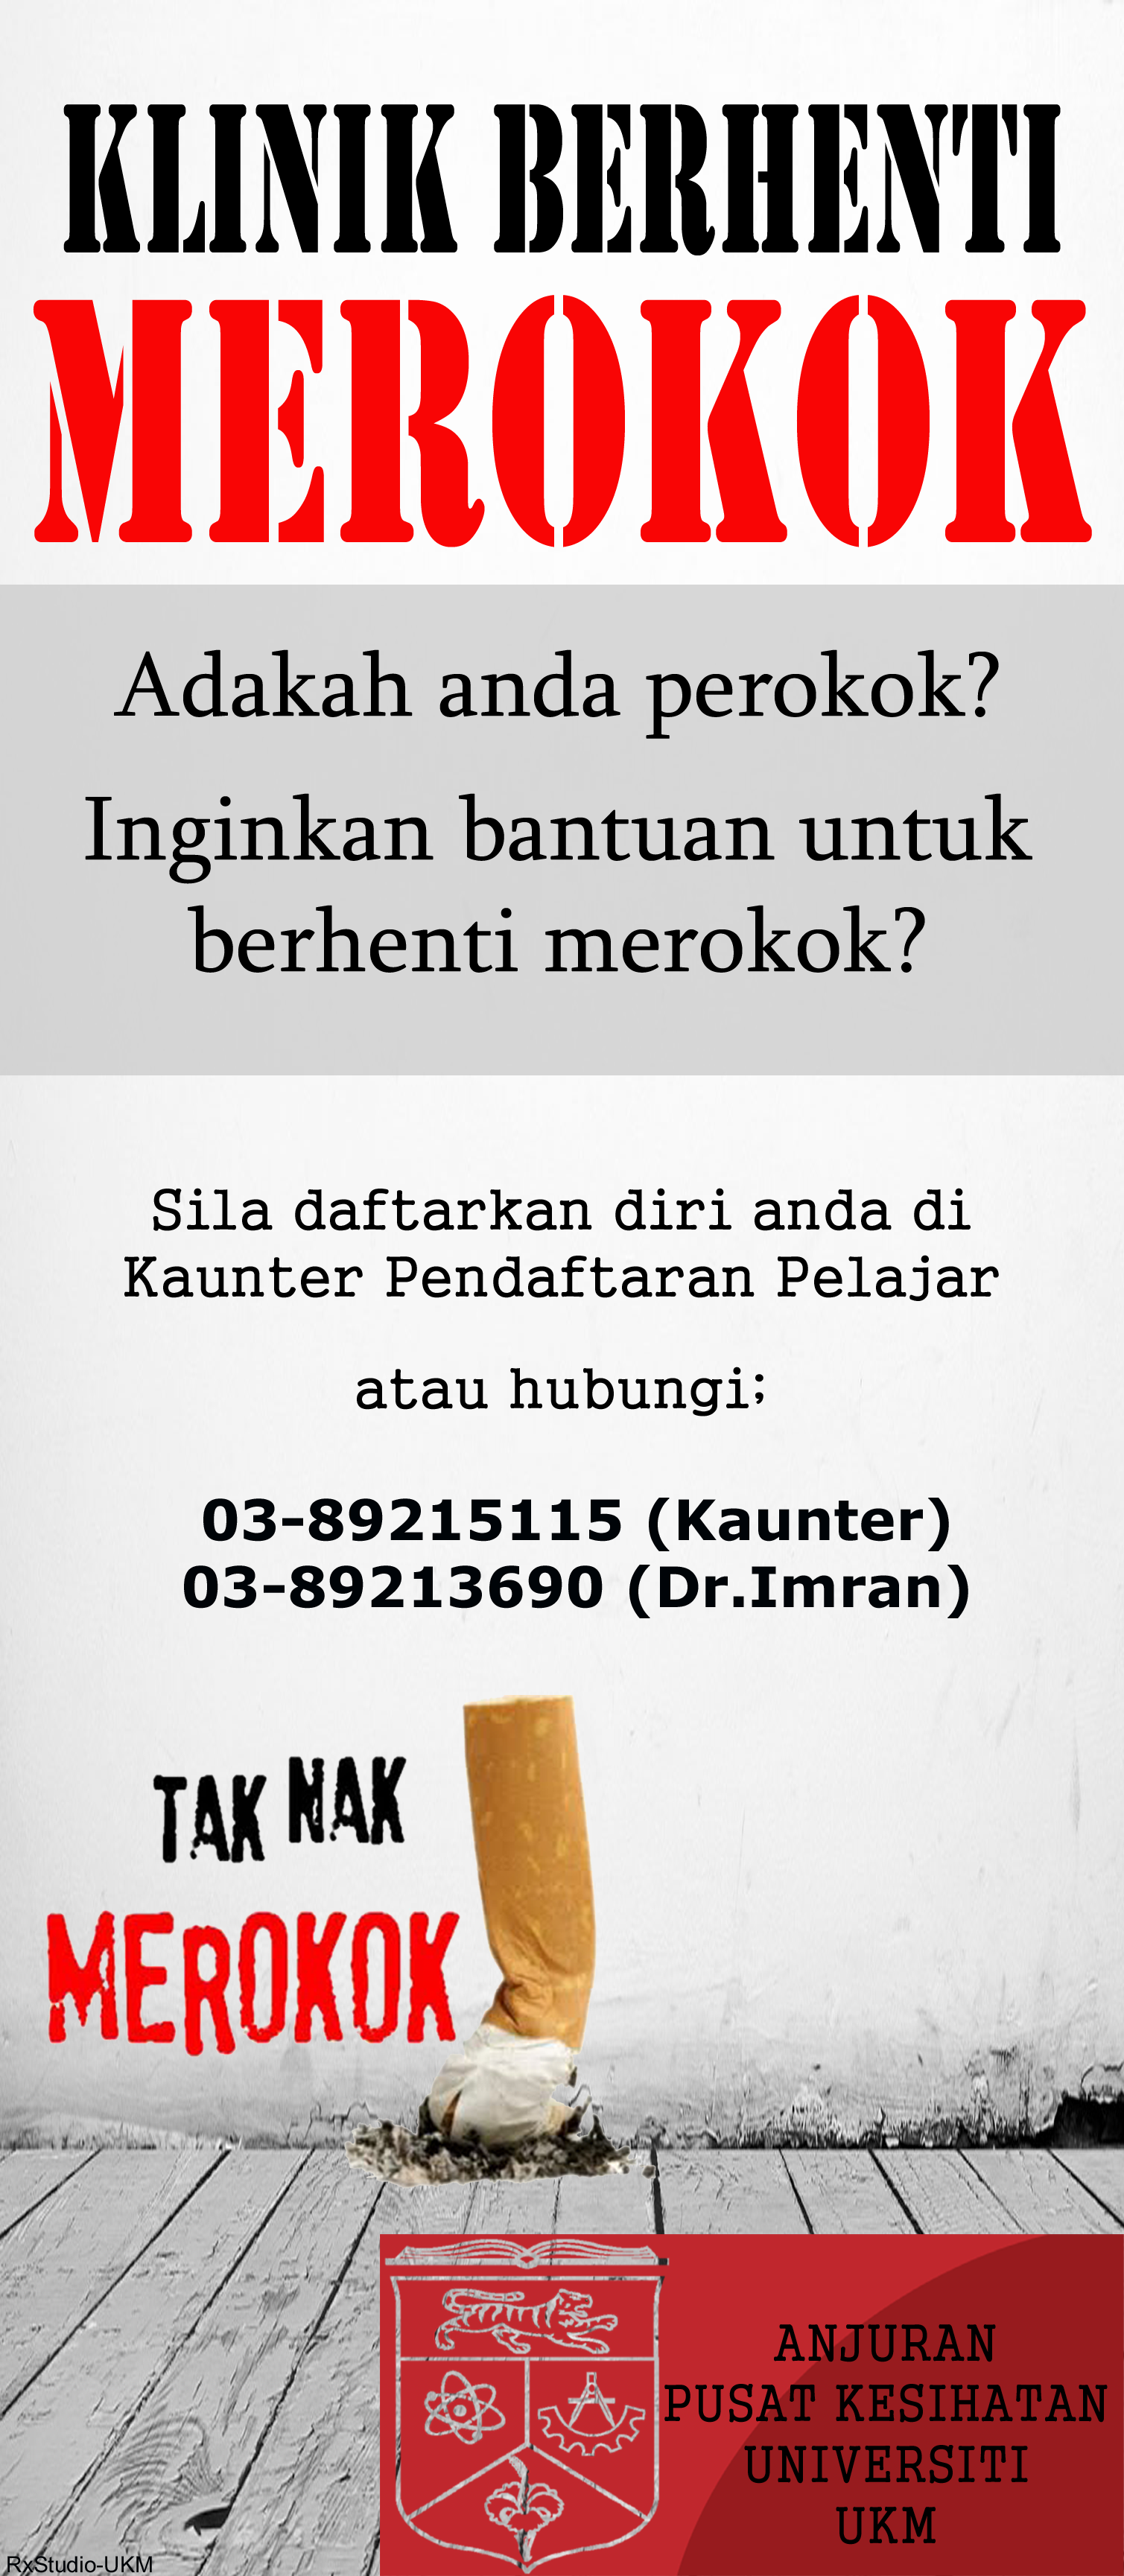 Nak merokok tak poster Gambar Mewarna